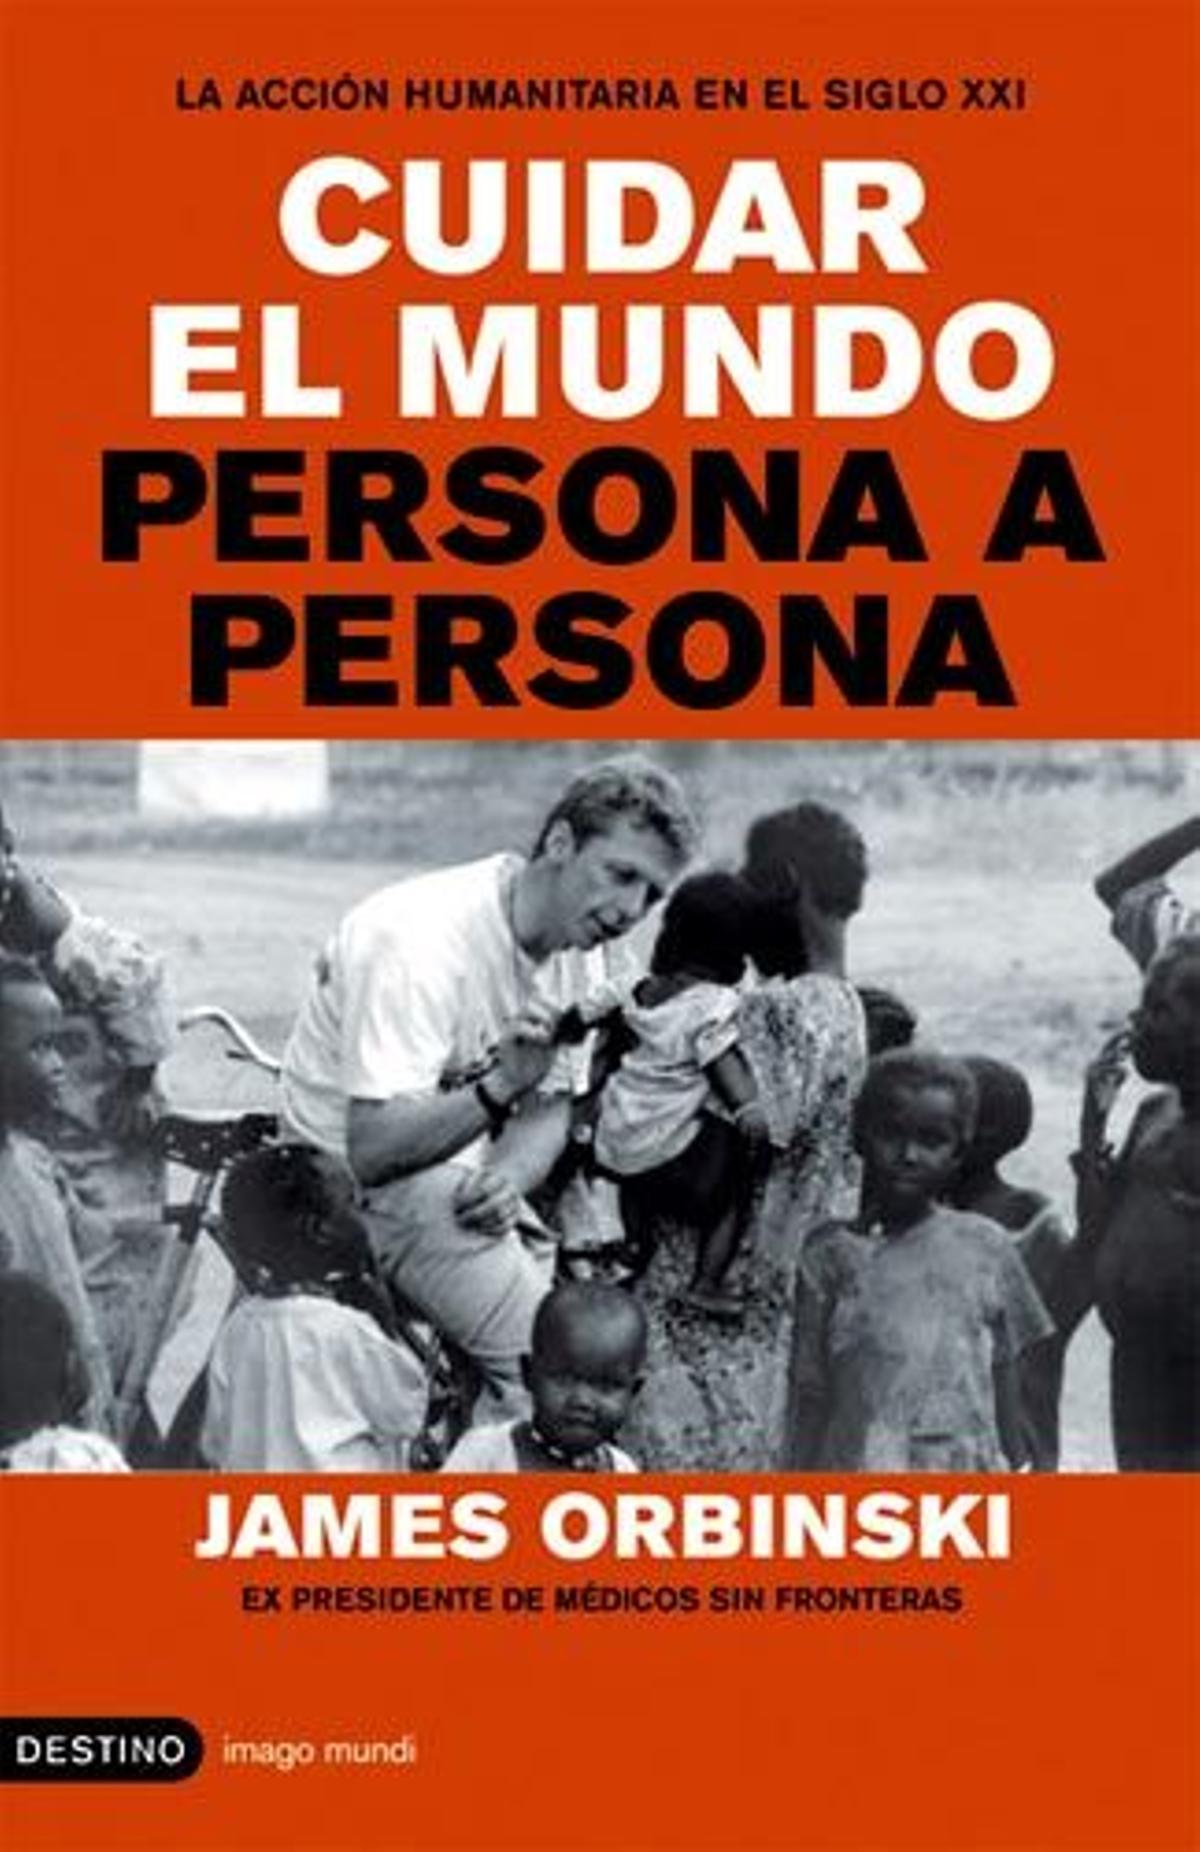 MUÉVETEEl testimonio delmédico humanitarioJames Orbinski enel libro ‘Cuidar elmundo de pers